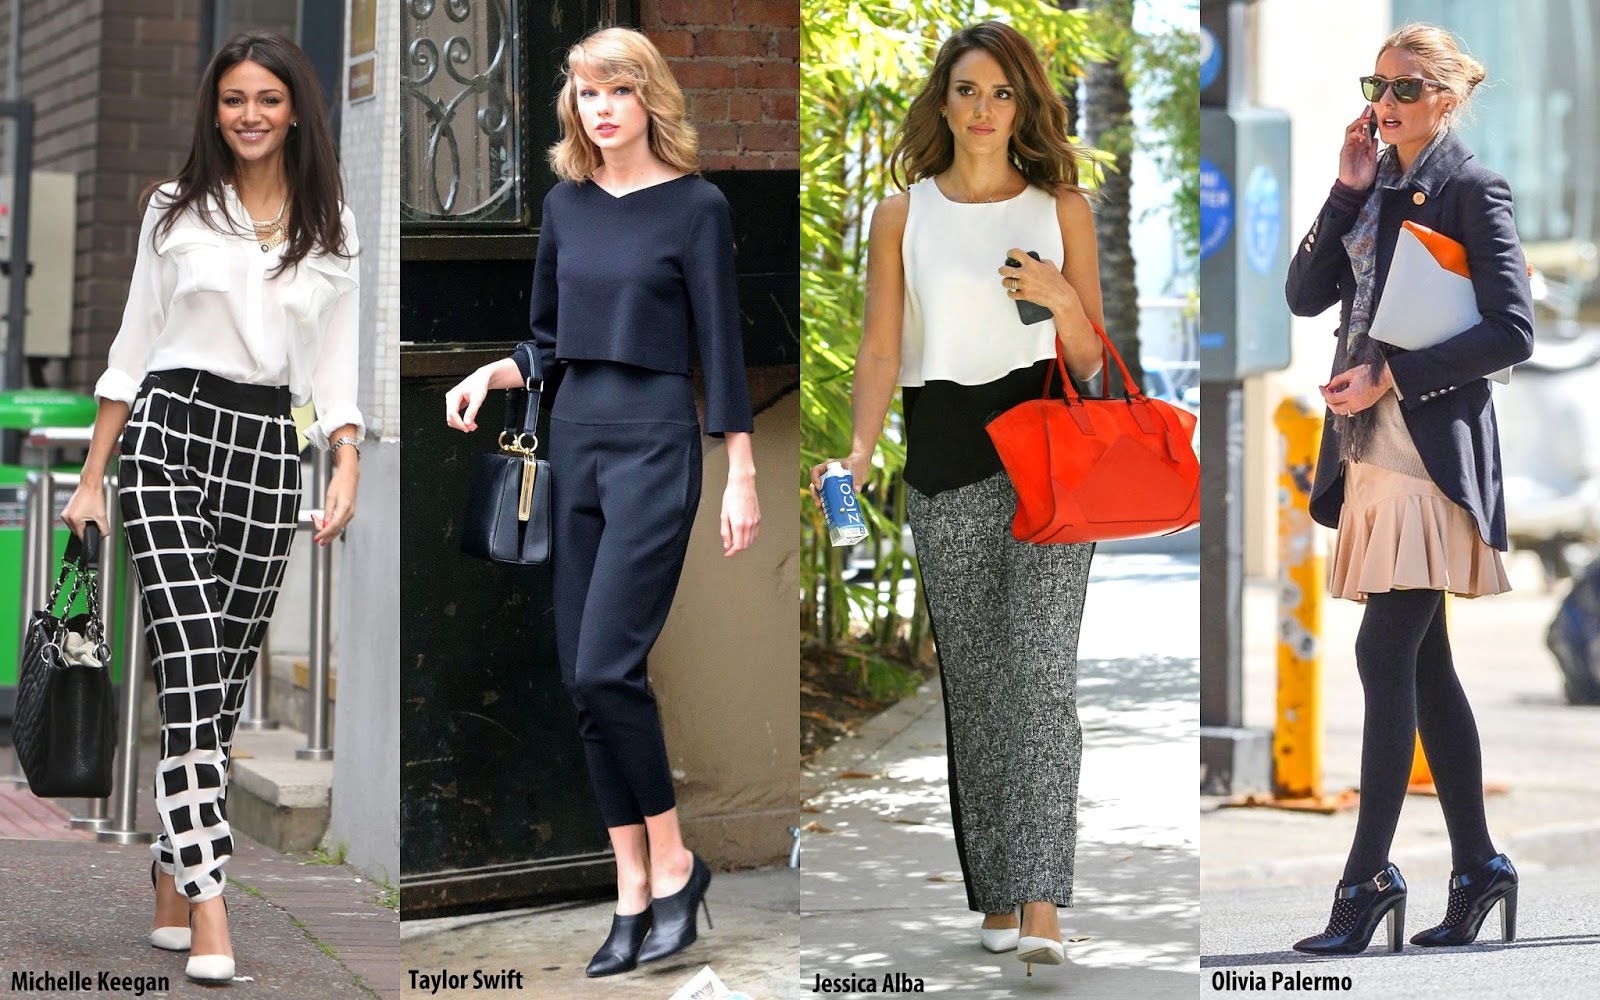 Blake Lively announced as new face of Chanel's Mademoiselle handbag line